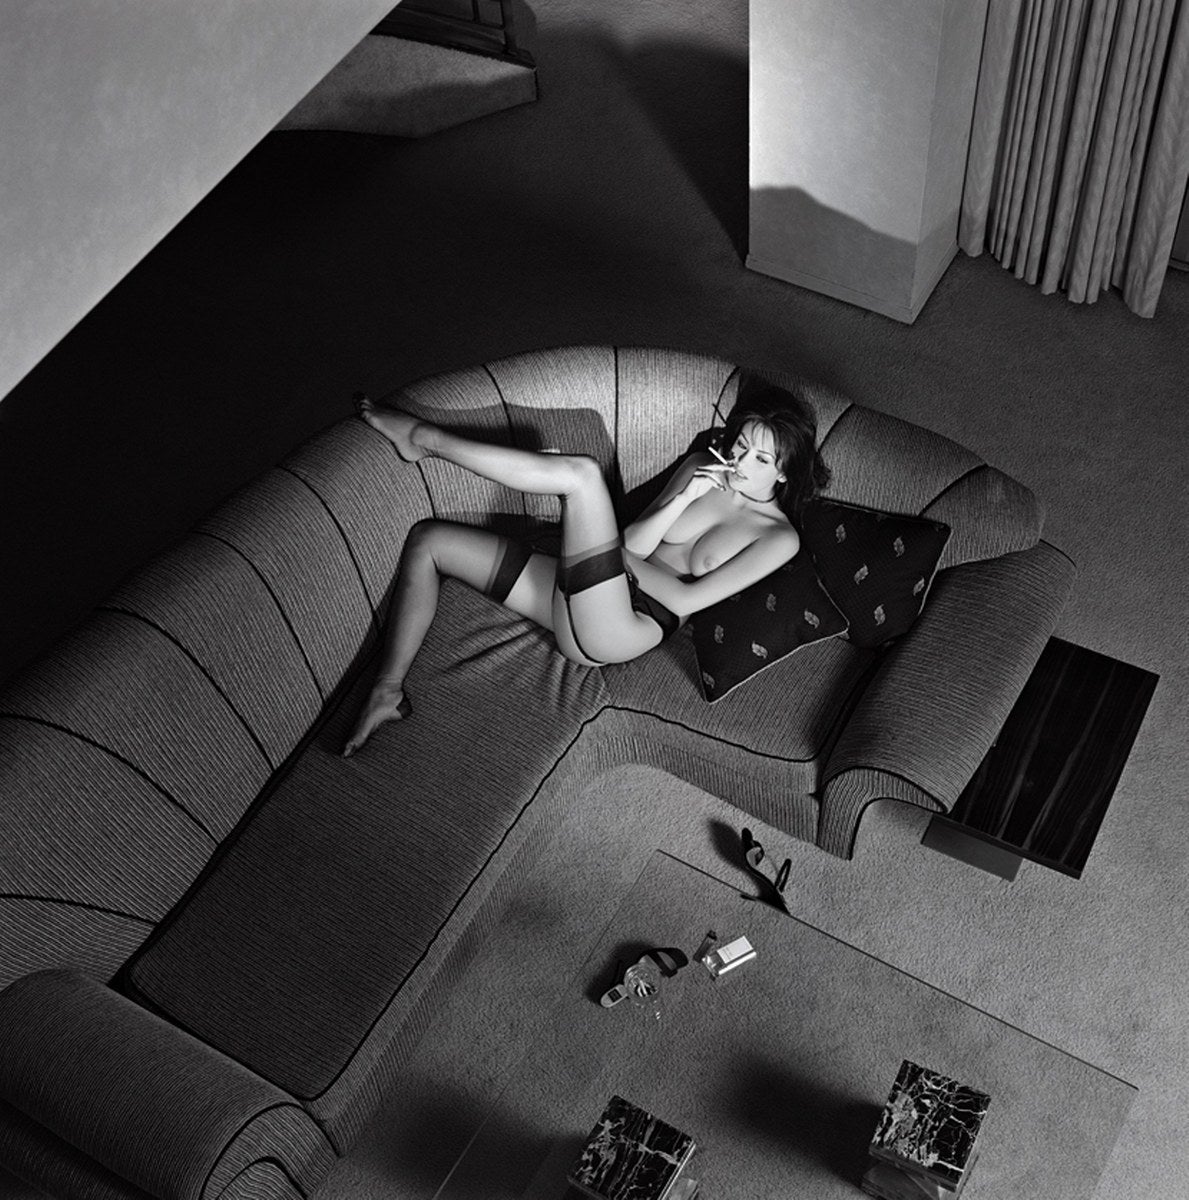 Petra Smoking a Cigarette - Nude Woman on a Sofa, Fine Art Photography, 2012